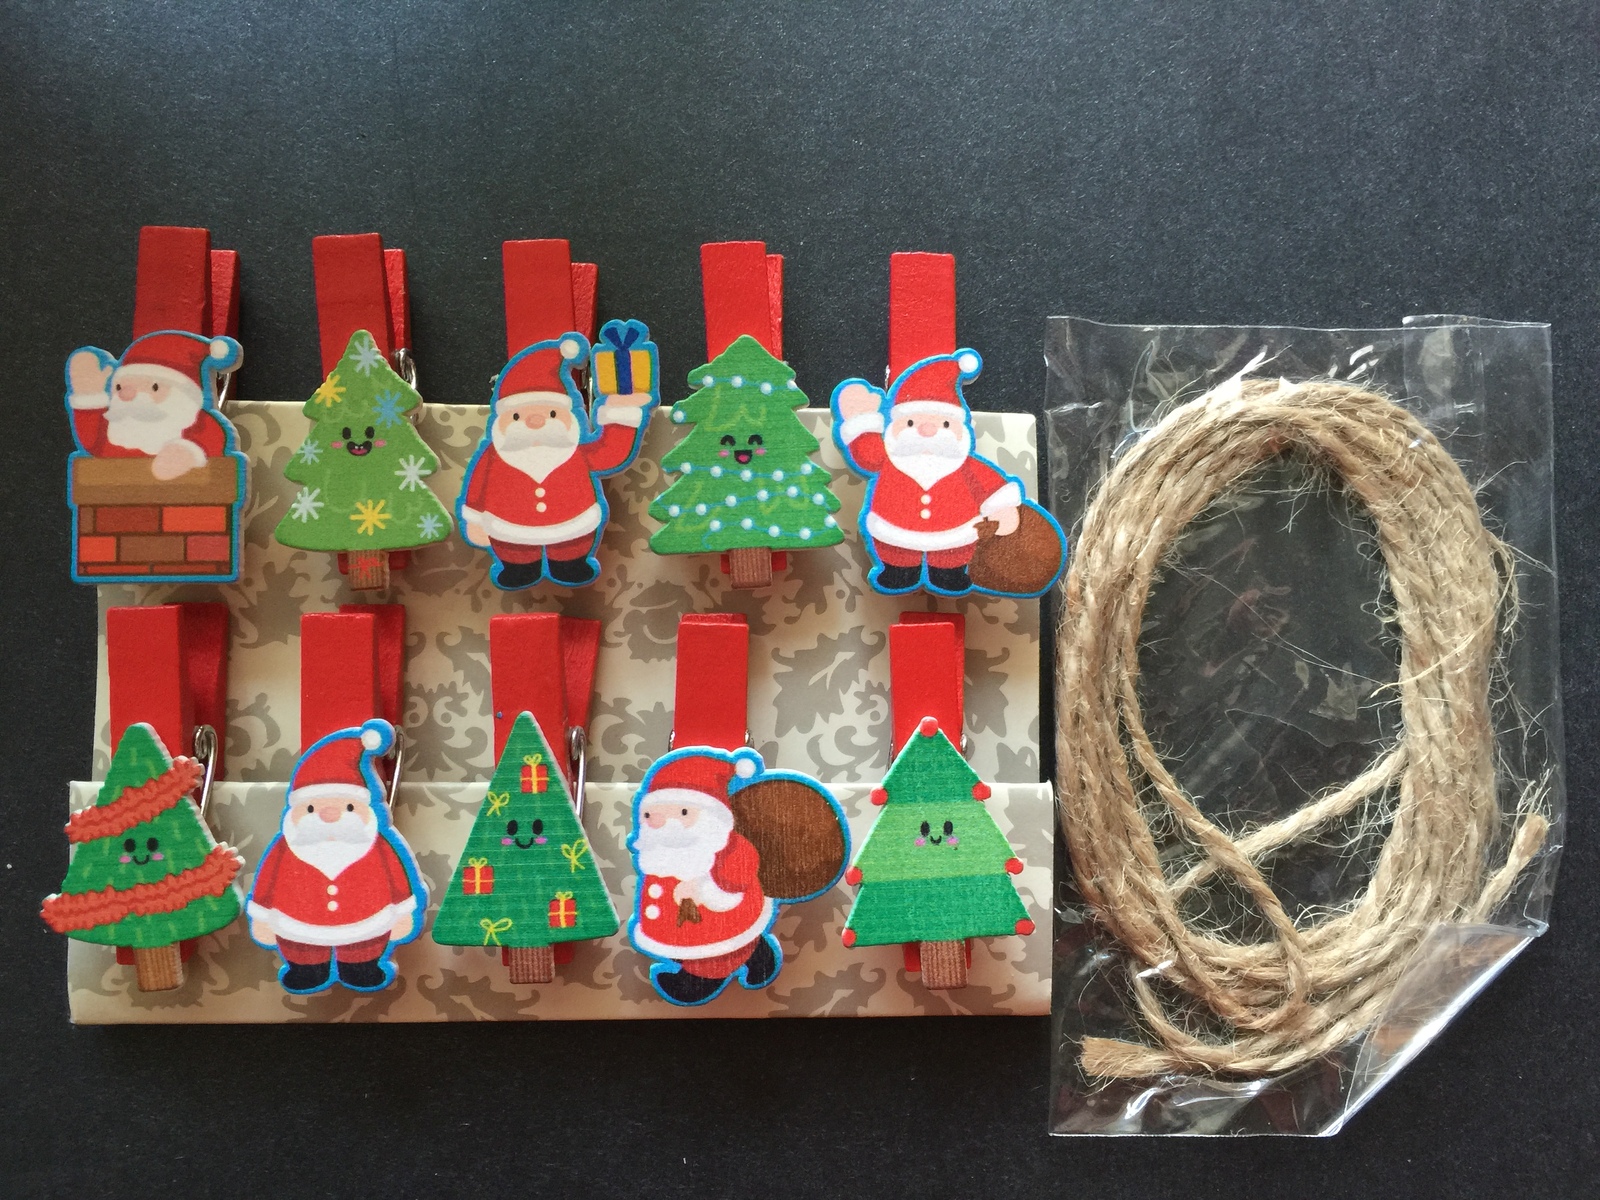 200pcs Santa Claus Clothespin Crafts,Wooden Paper Clips,Christmas Tree Ornaments